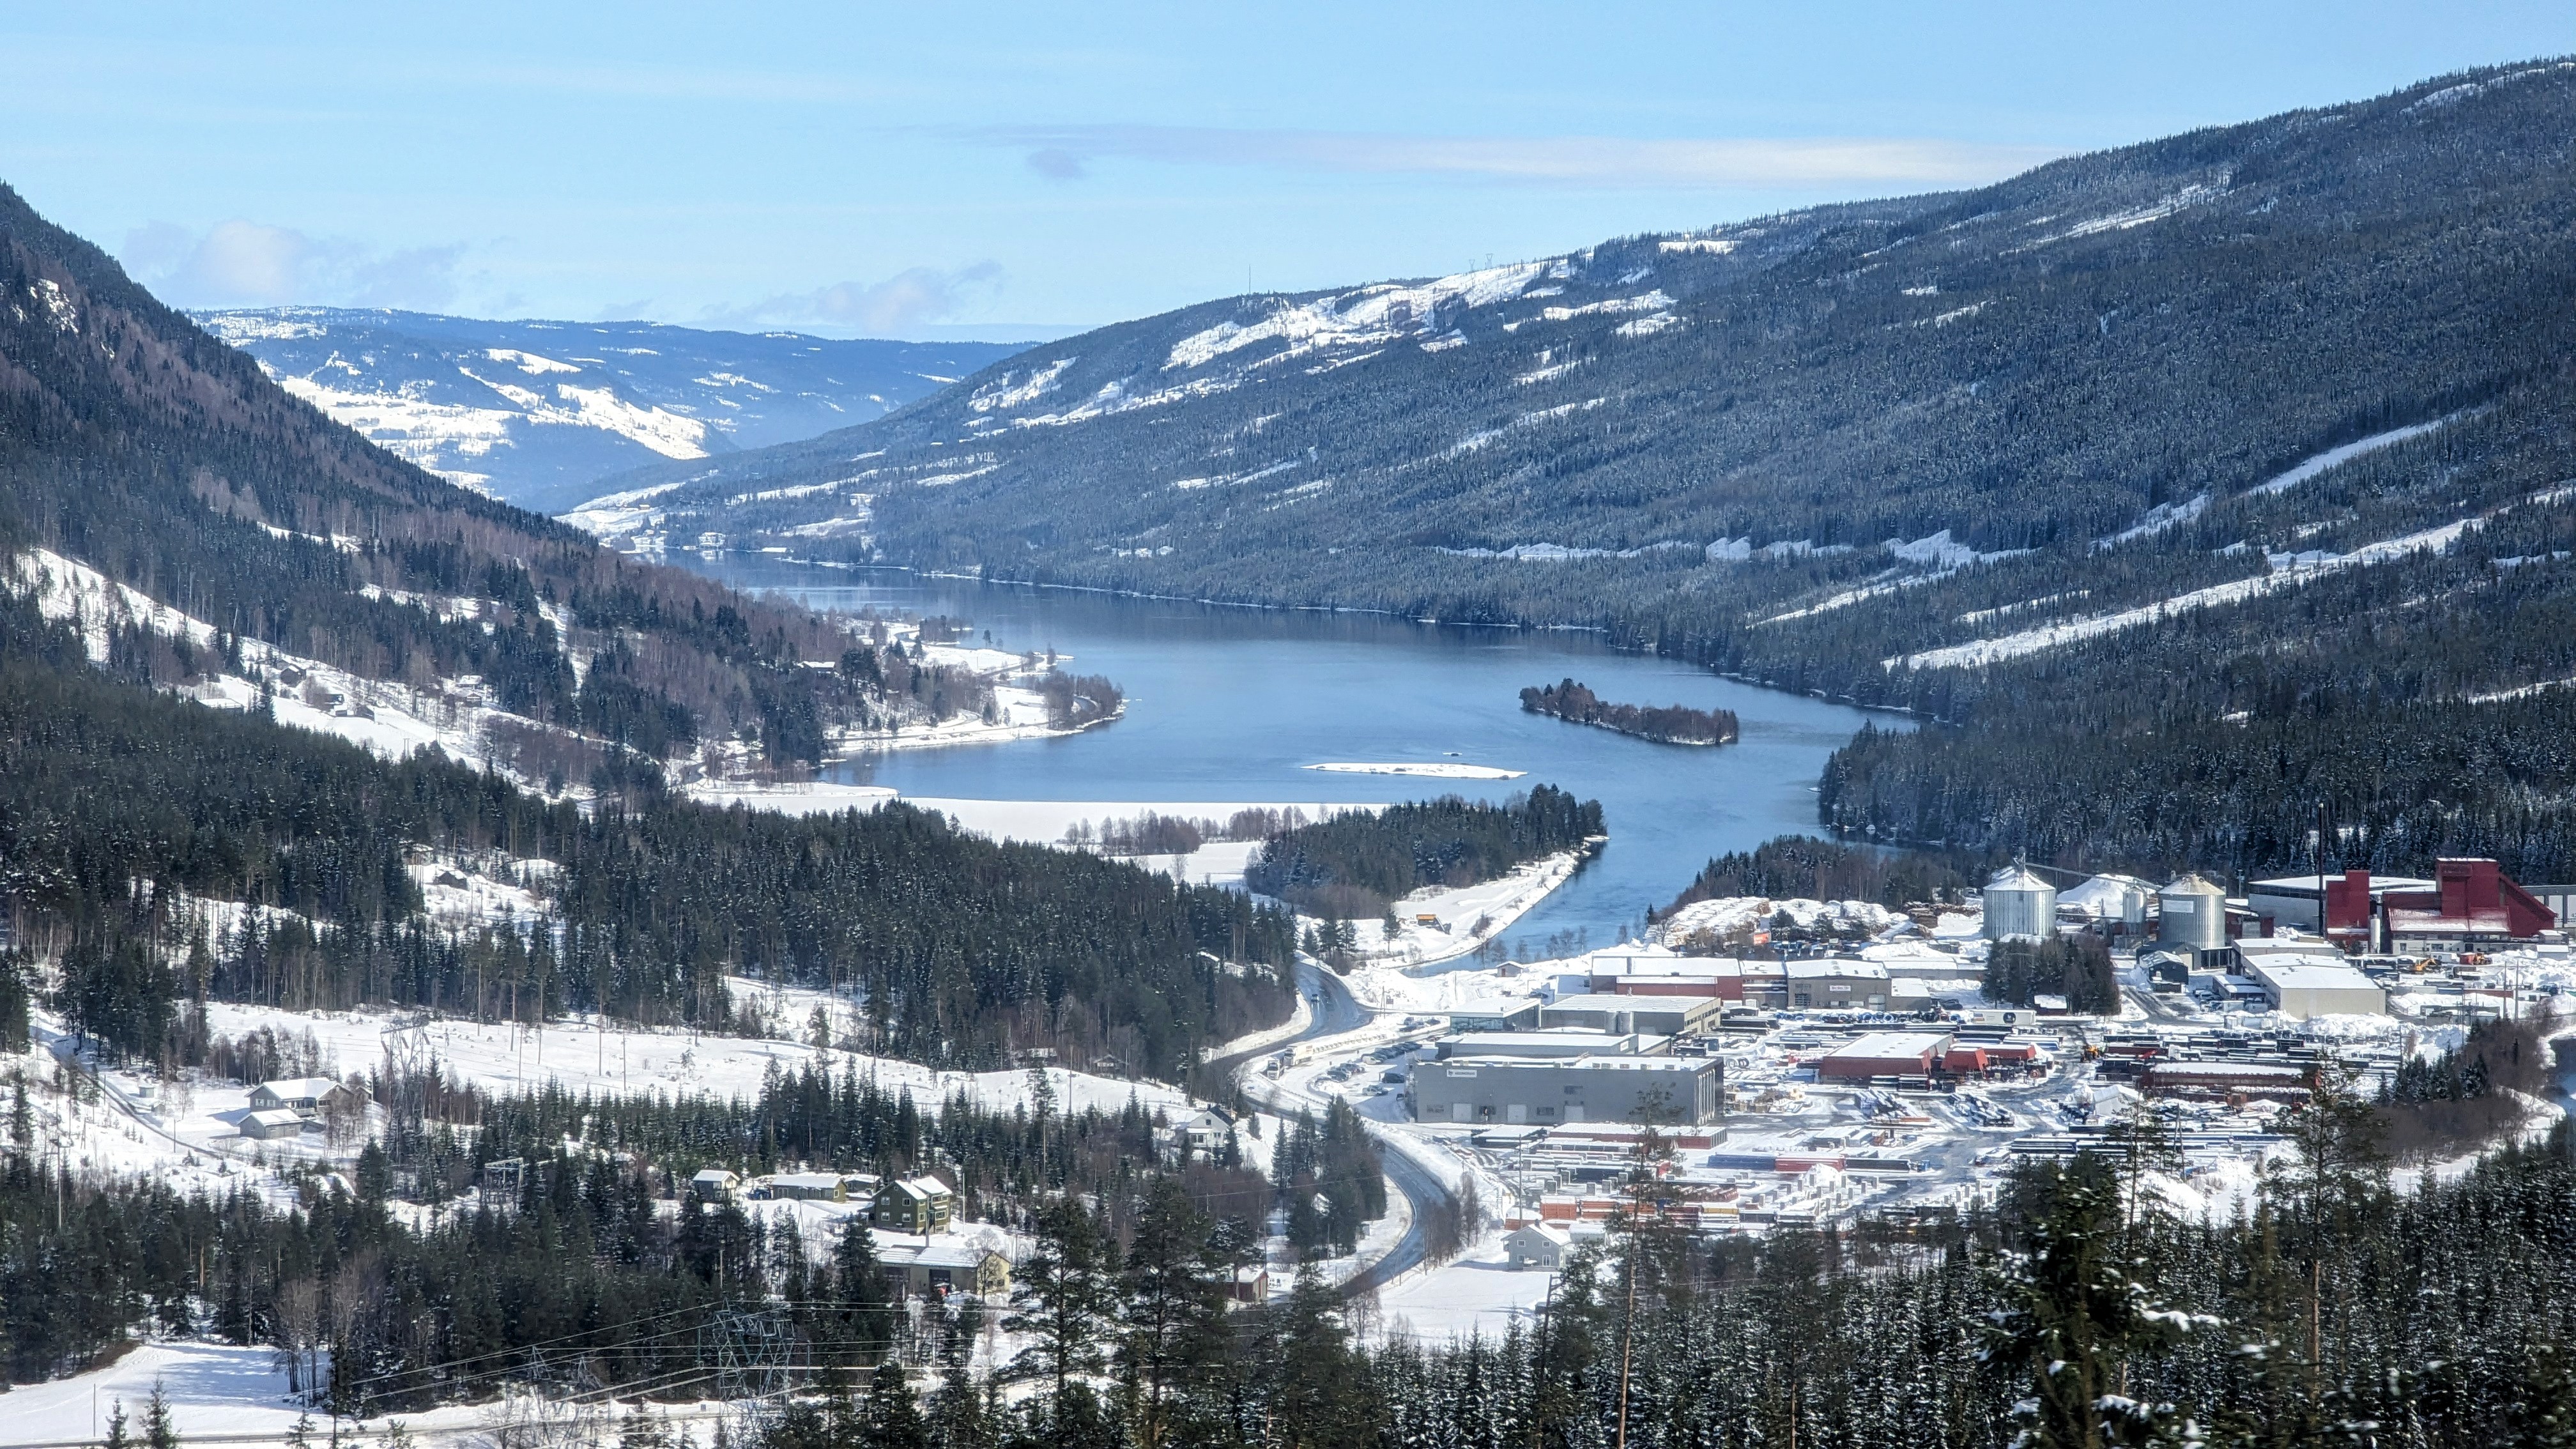 Six days on the Bergen and Flåm railways